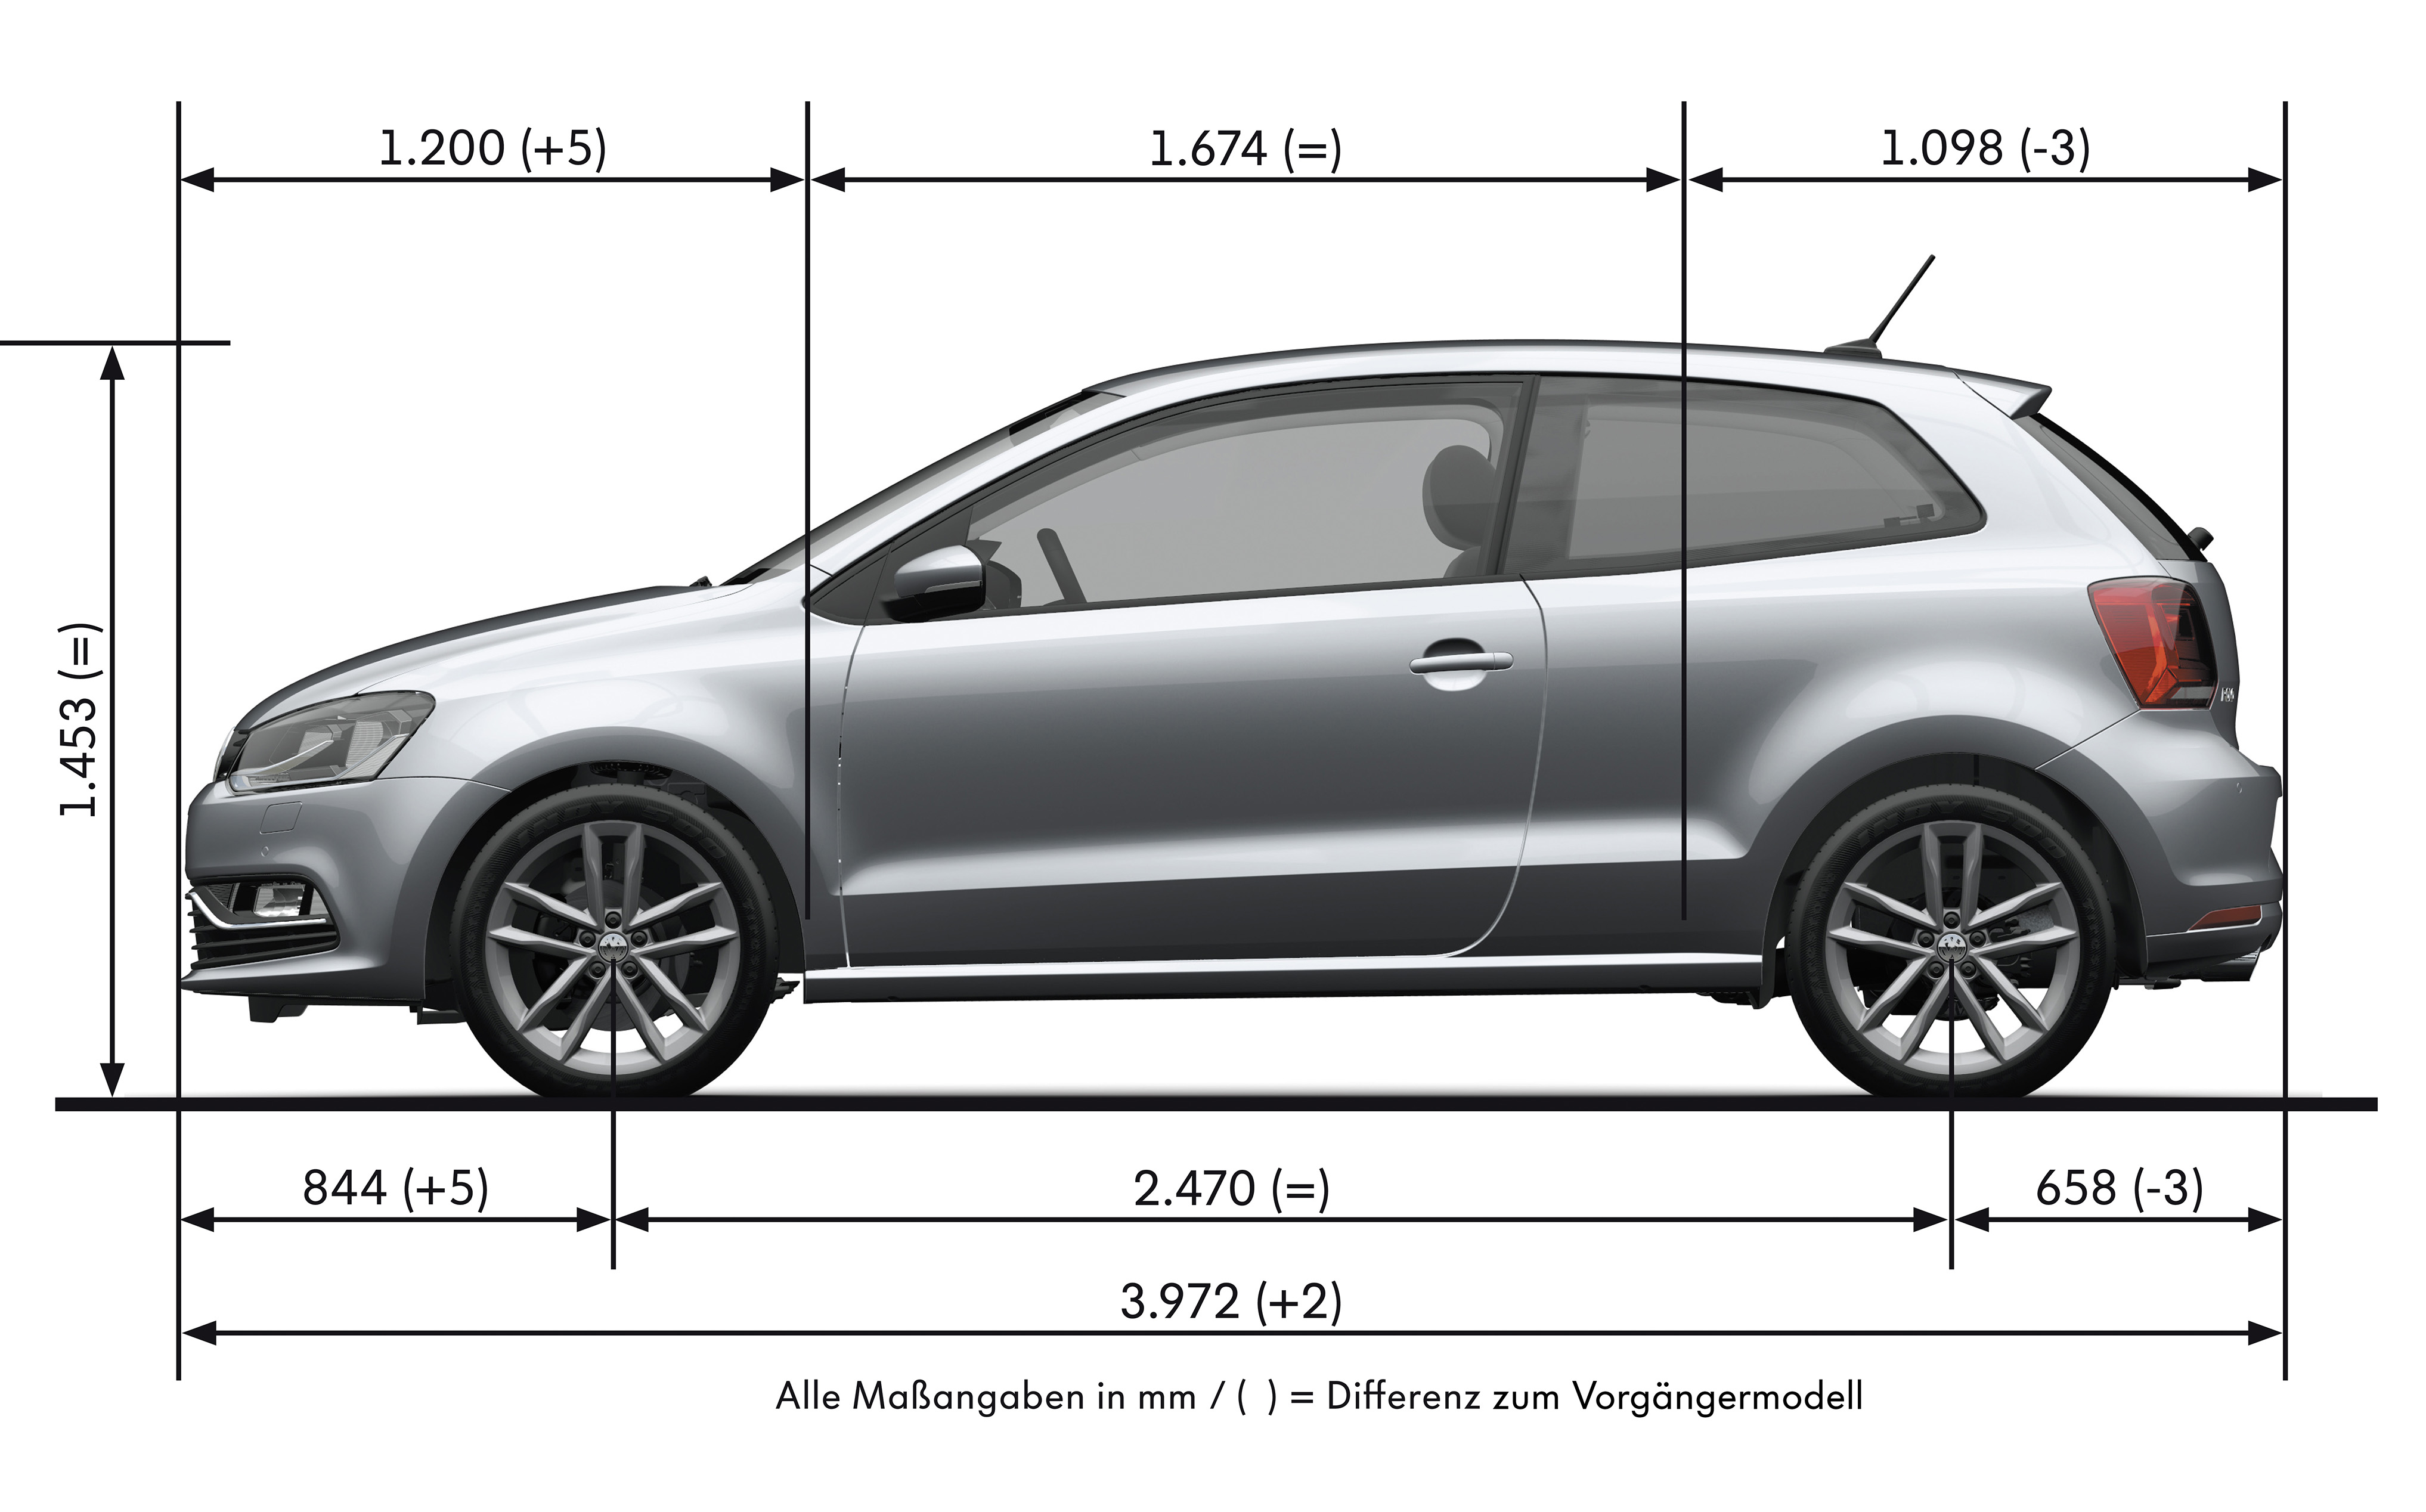 Dane techniczne Volkswagen Polo 1.2 TSI 110 KM Highline